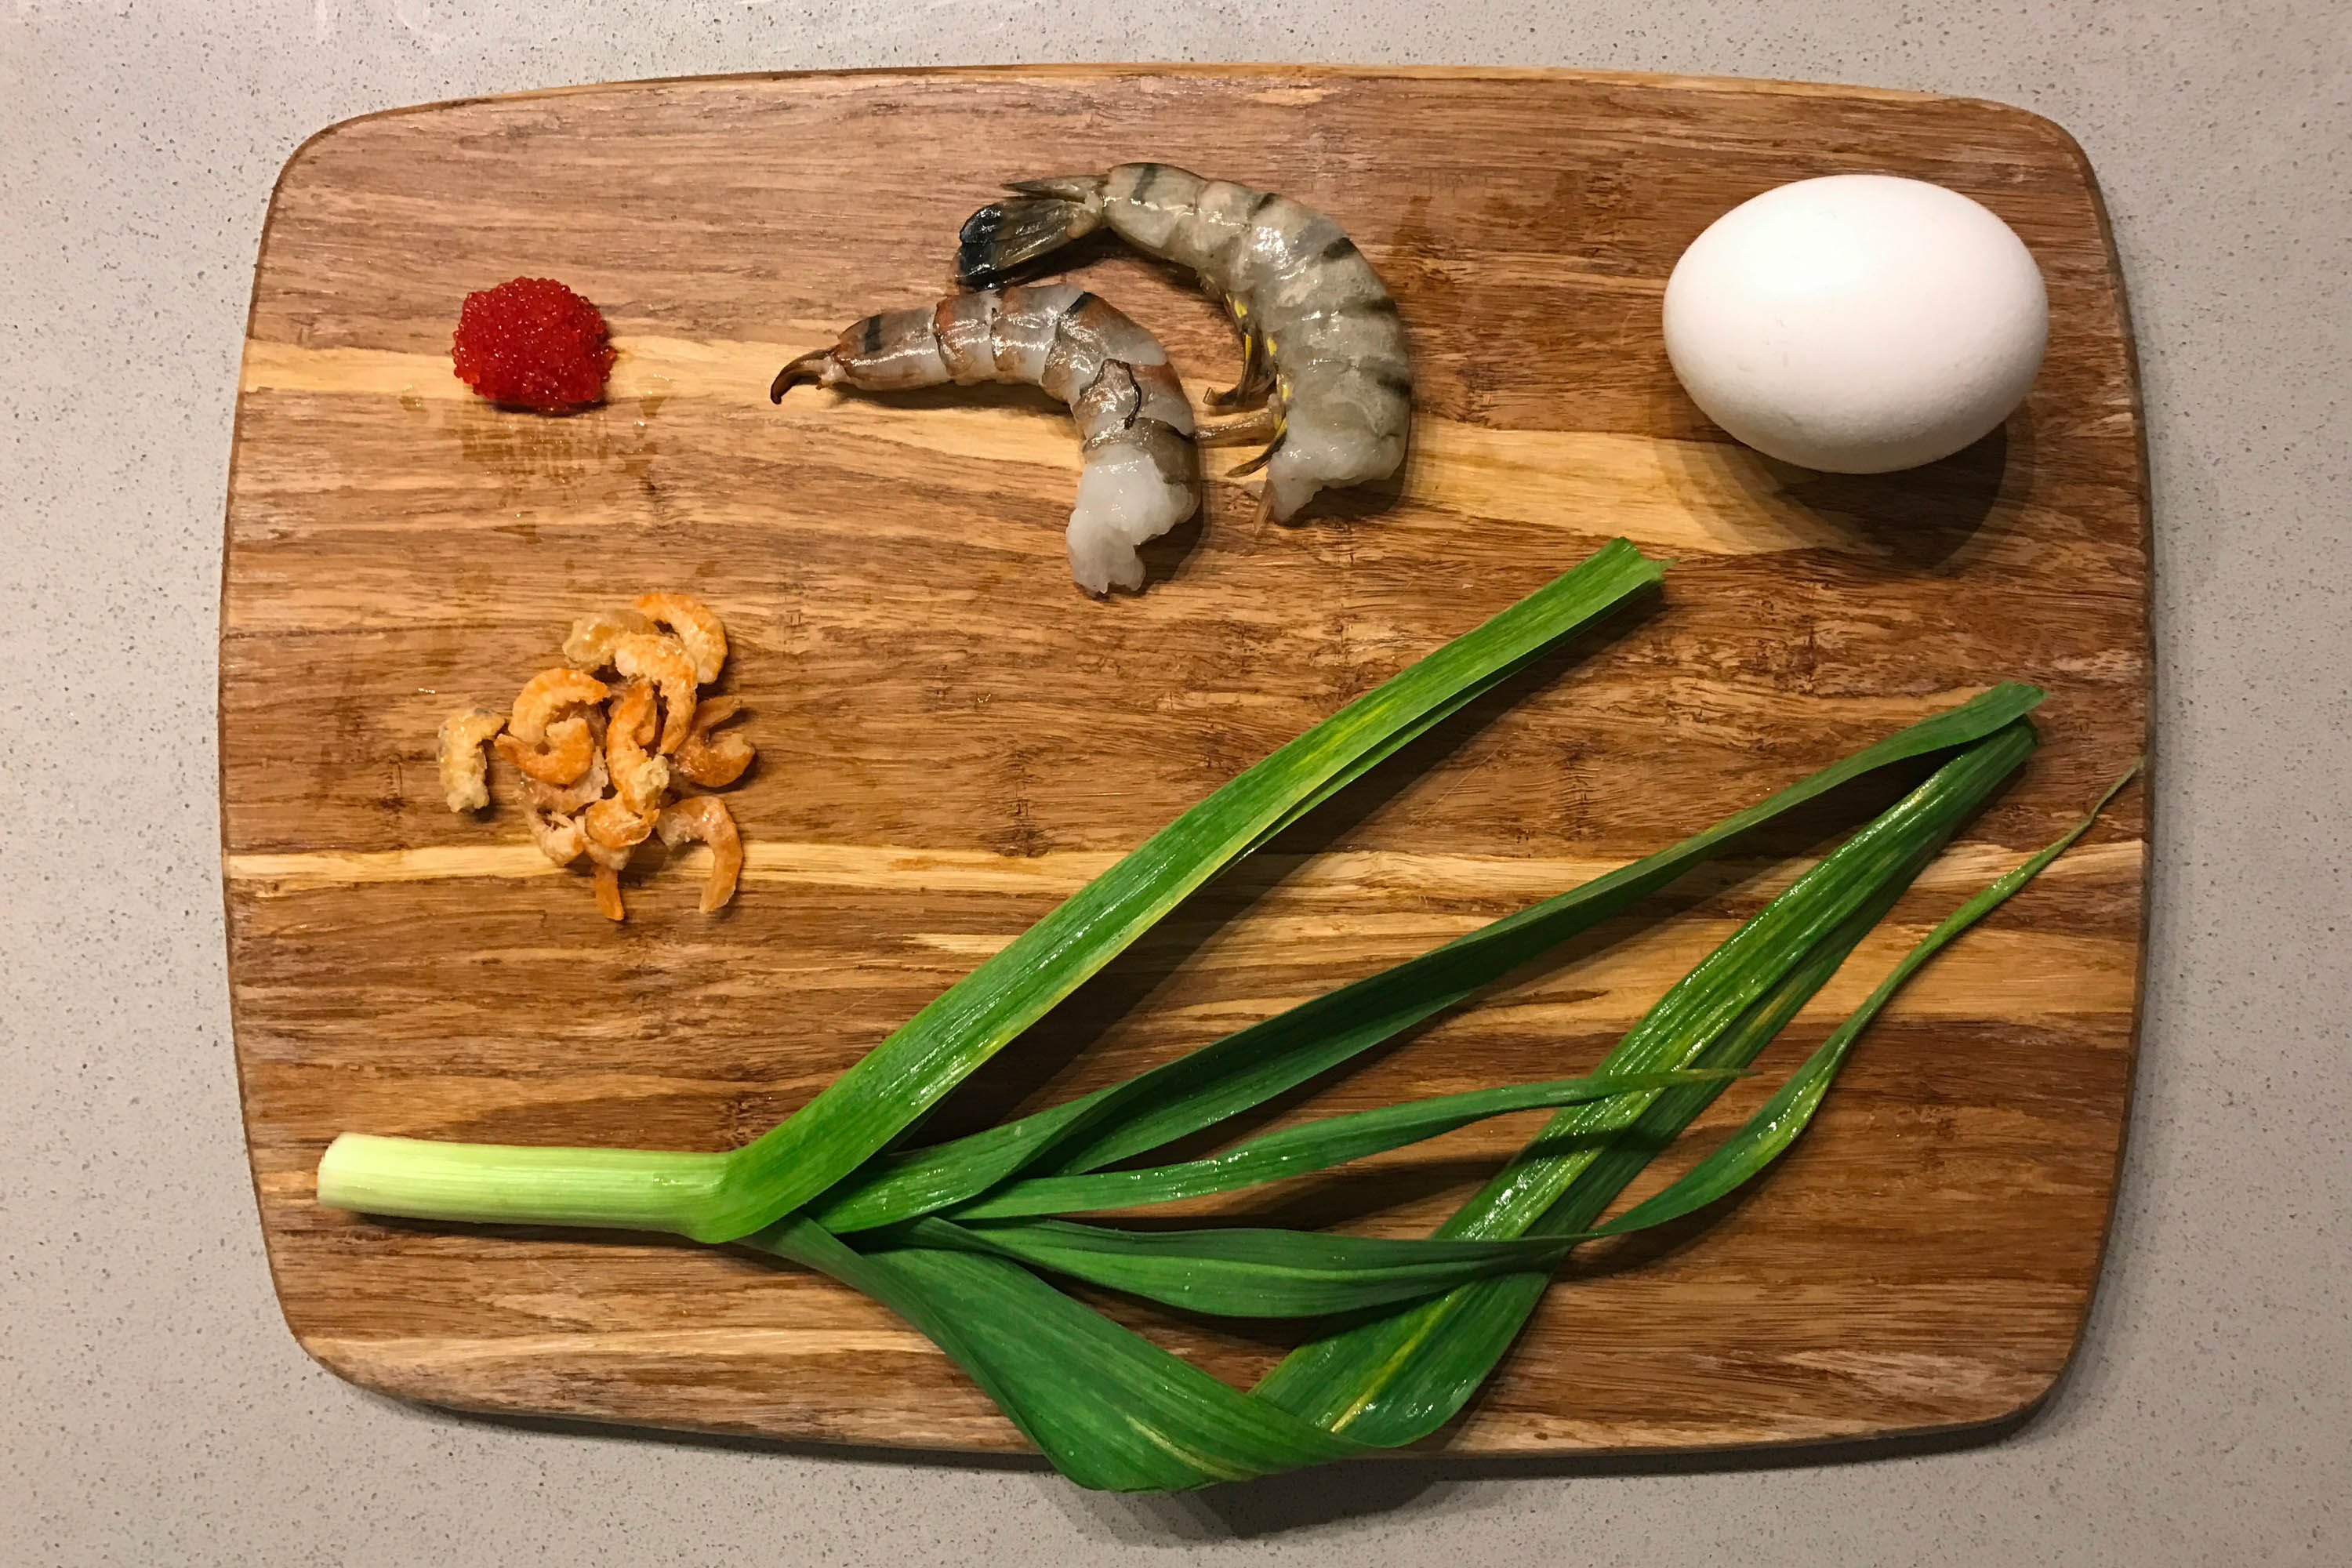 Shrimp Ingredients